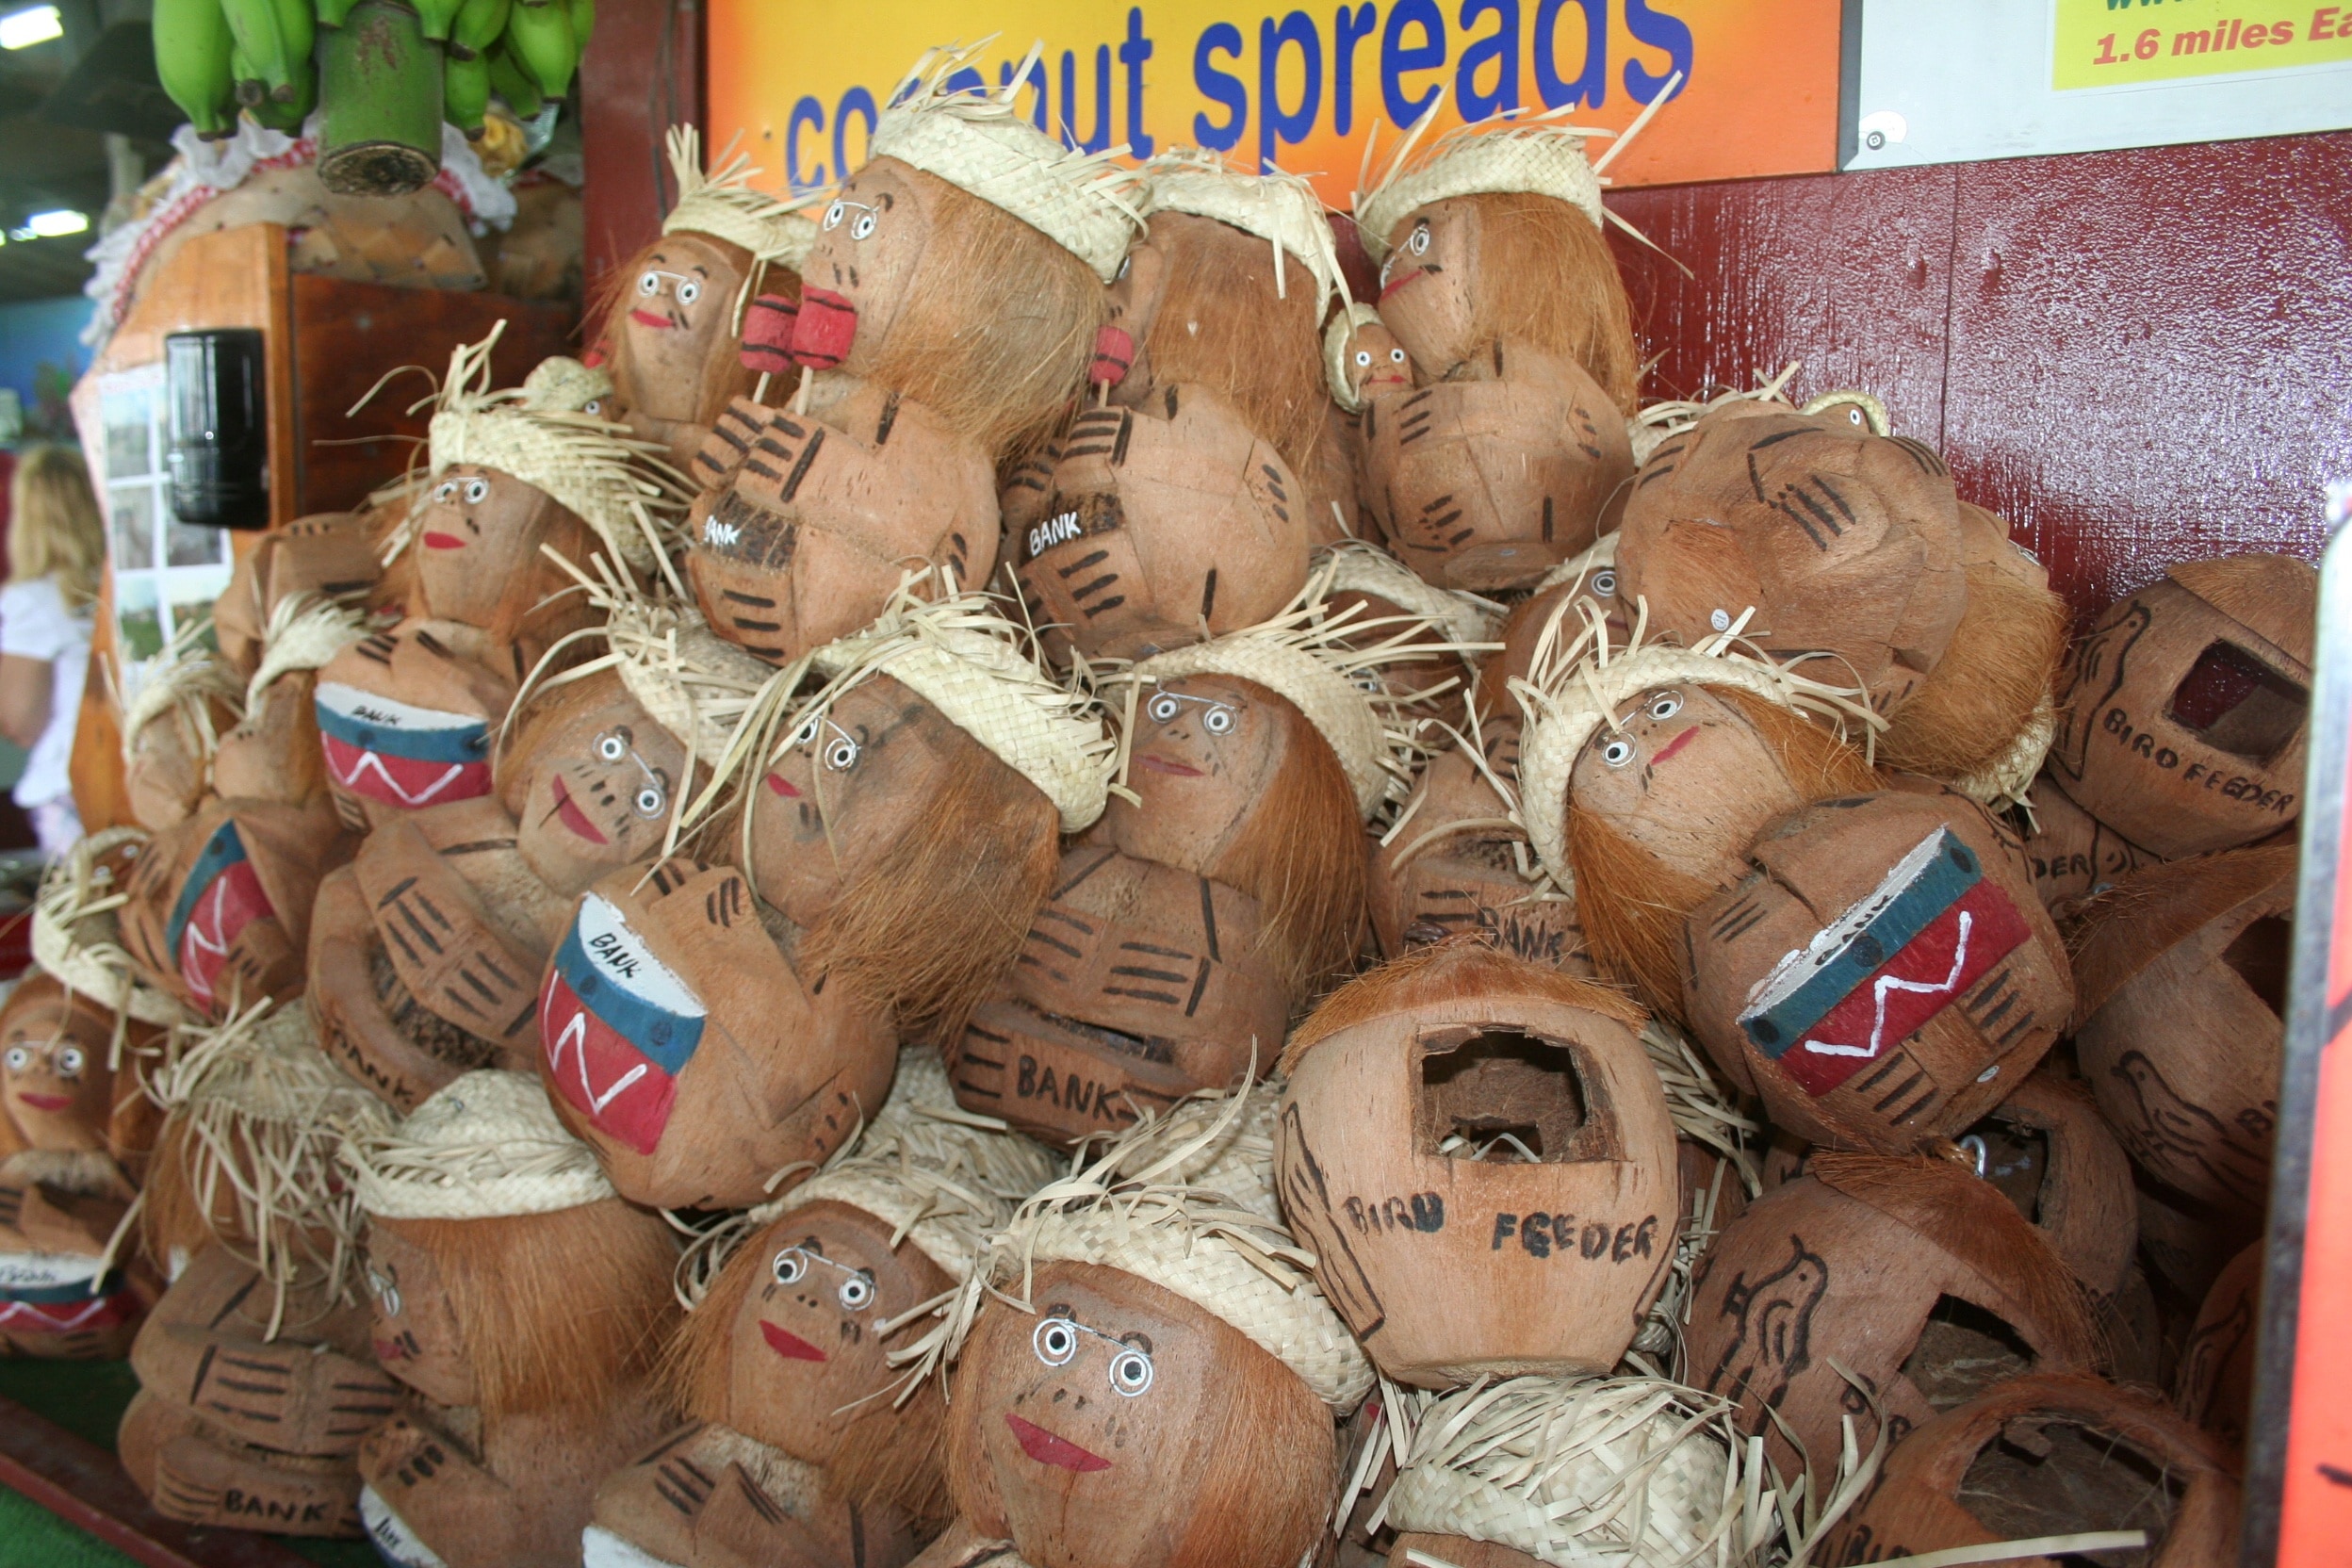 coconut husk dolls